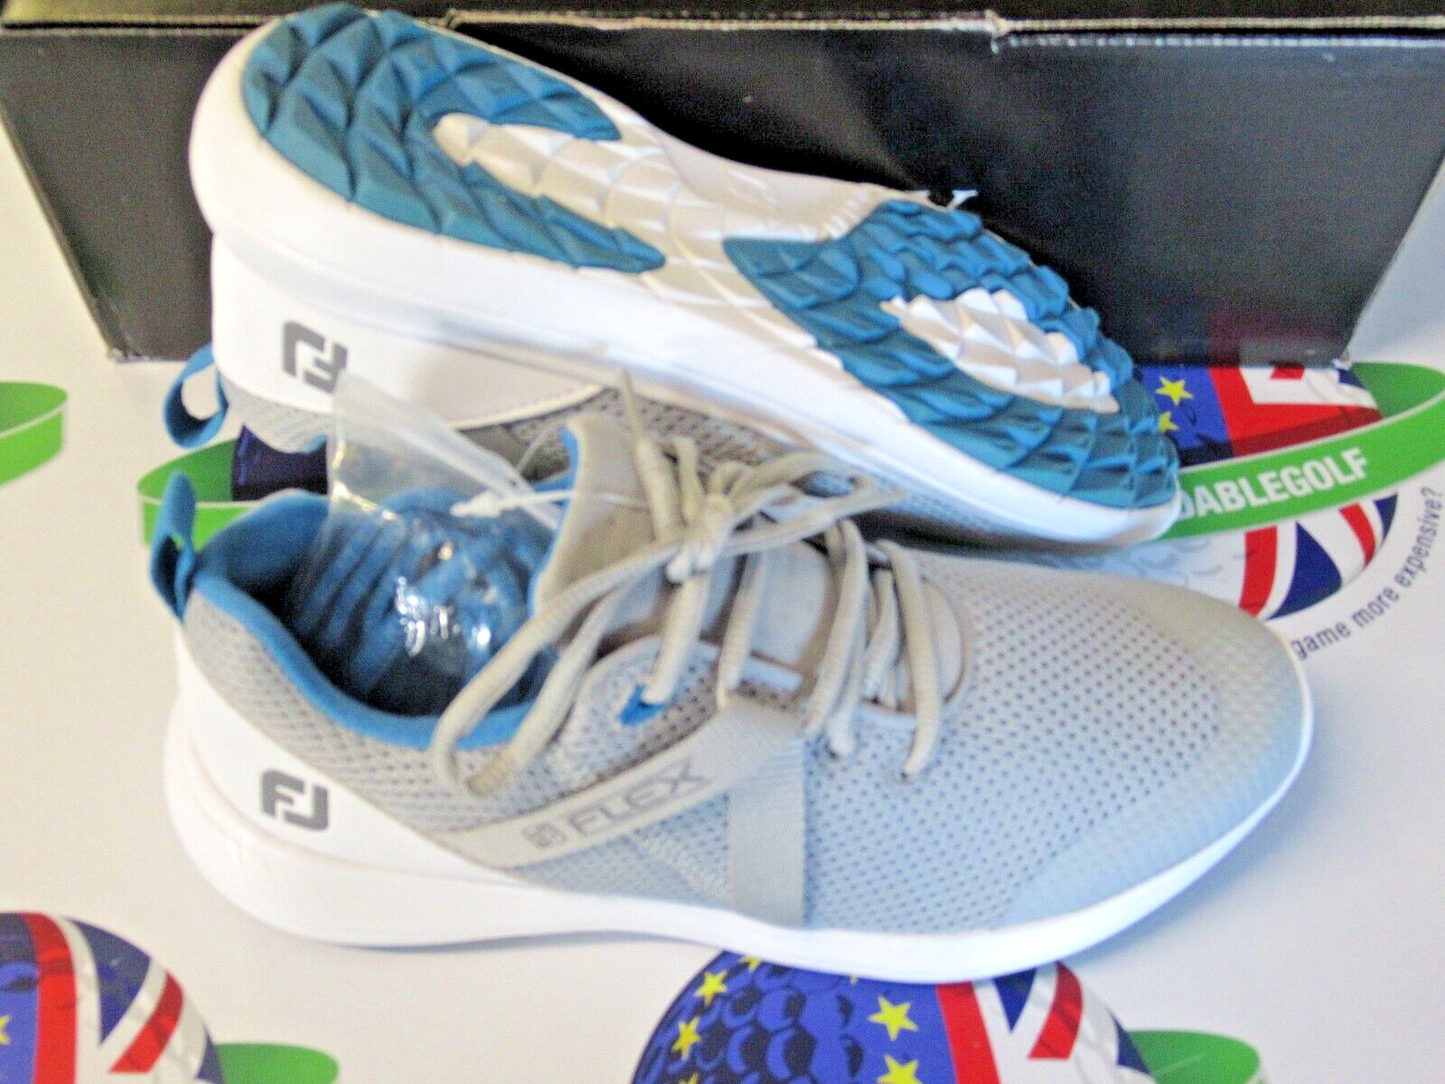 footjoy flex ladies golf shoes grey/blue/white 95727k uk size 4 medium